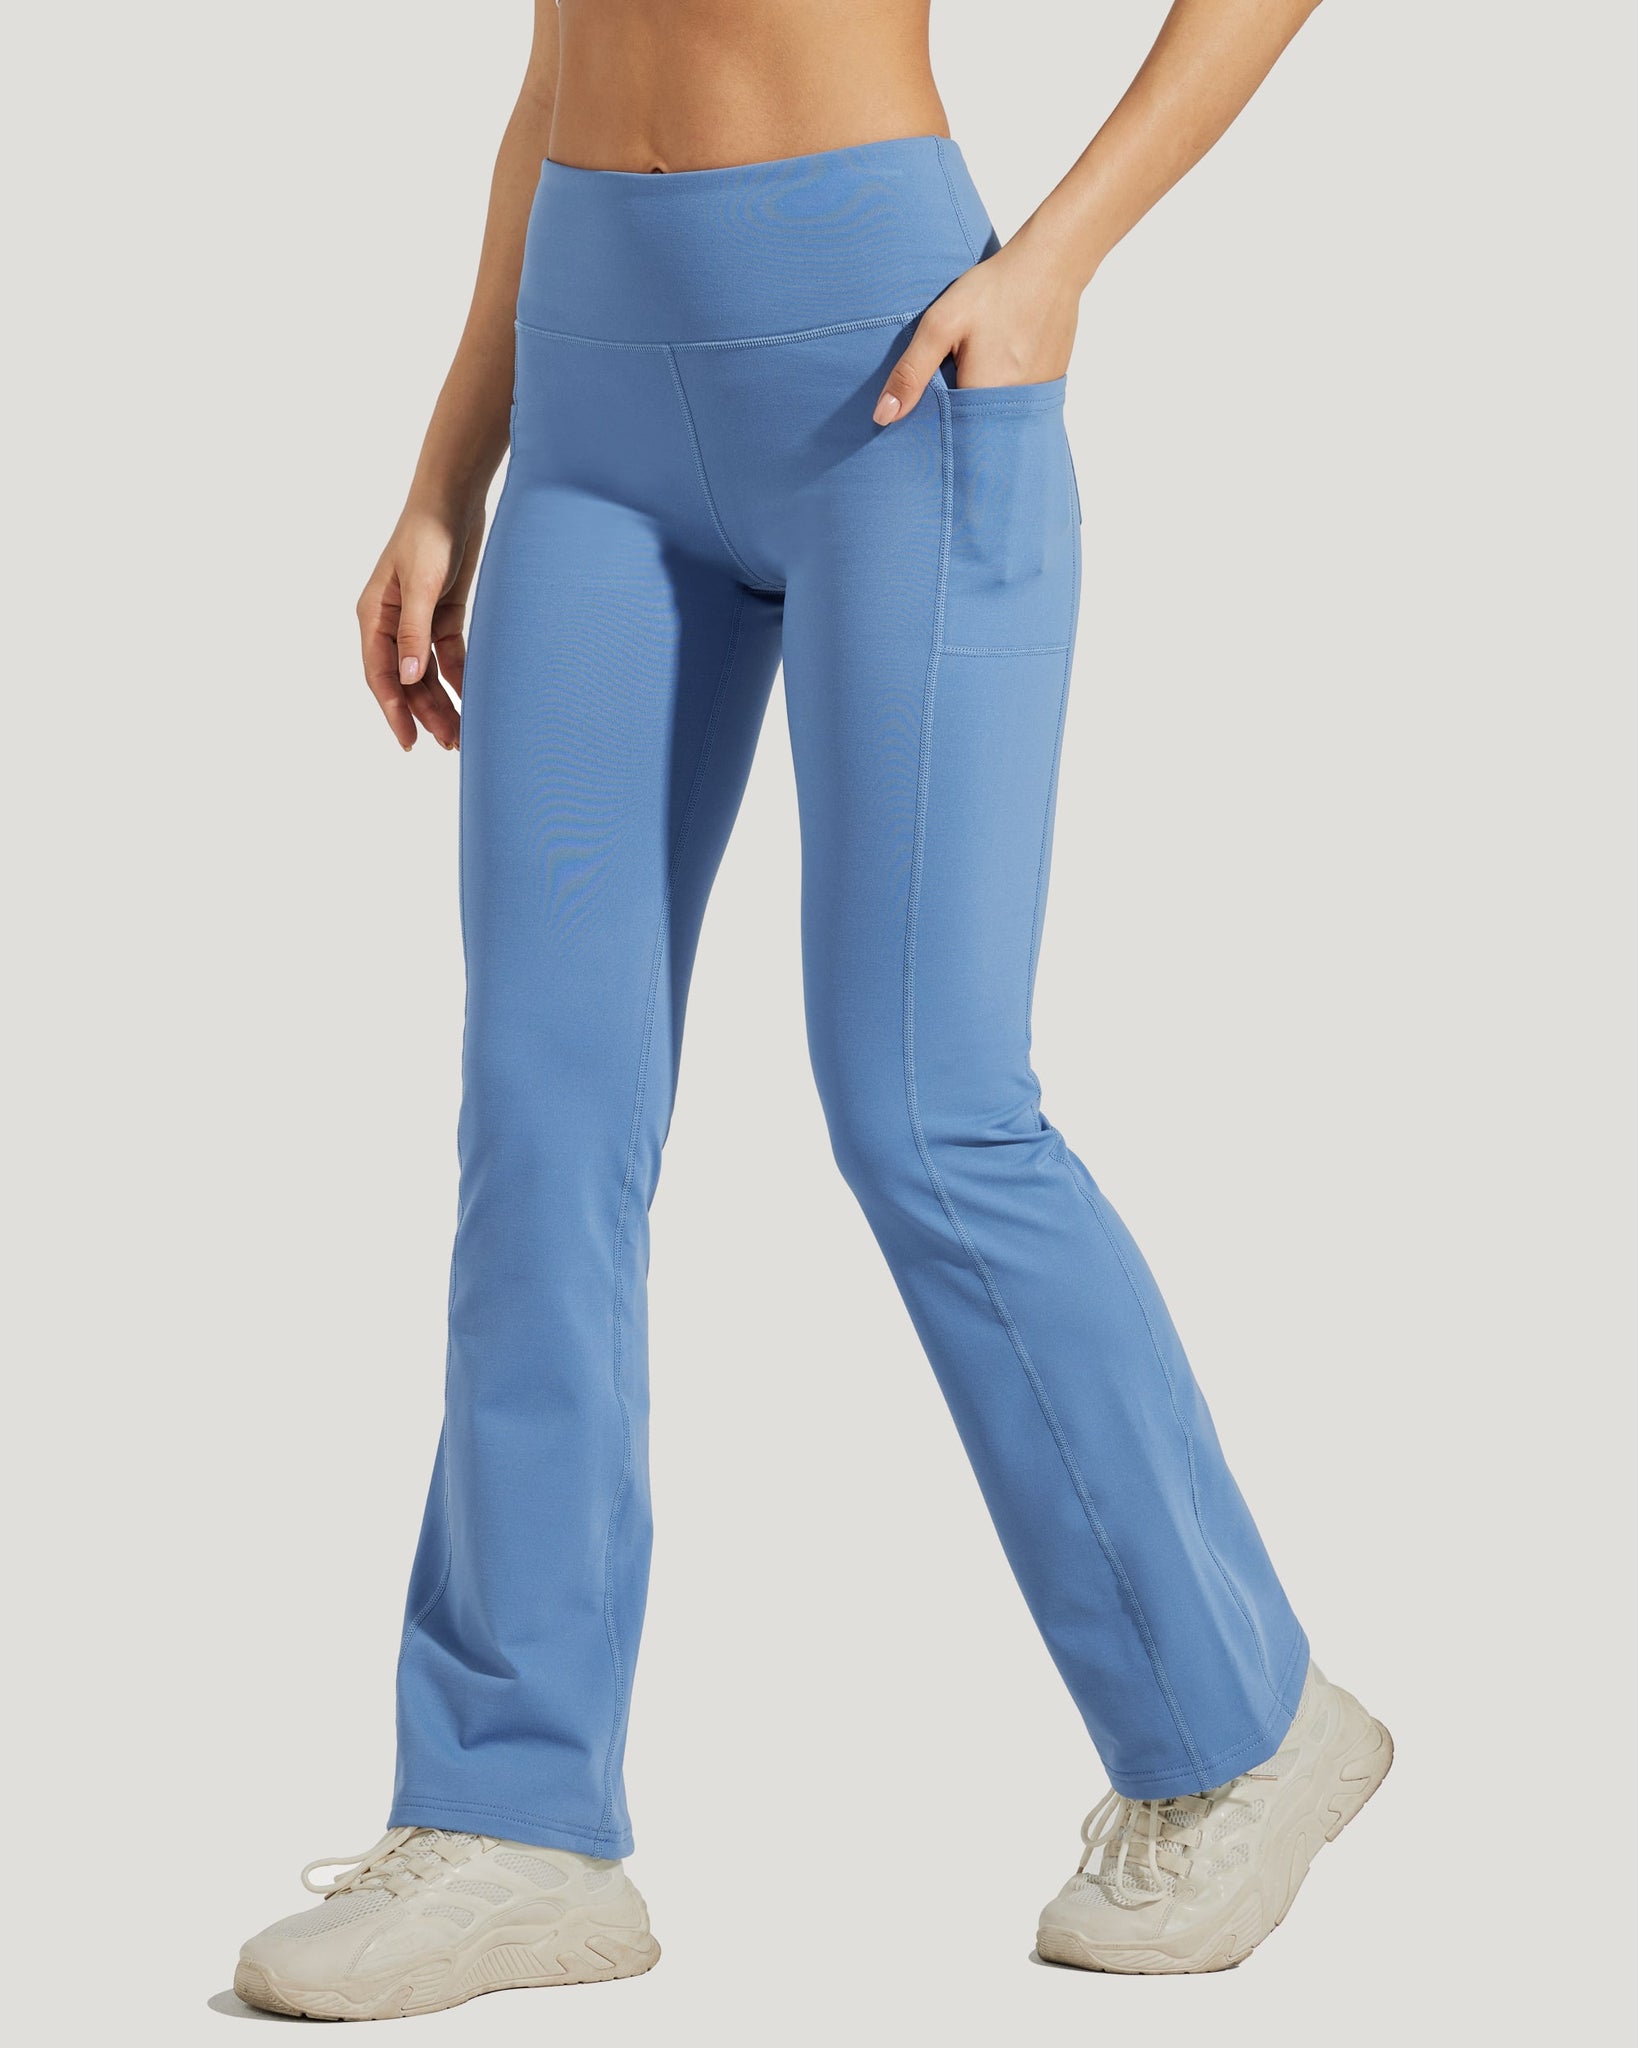 Women's Fleece Lined Bootcut Yoga Pants_Blue_model4